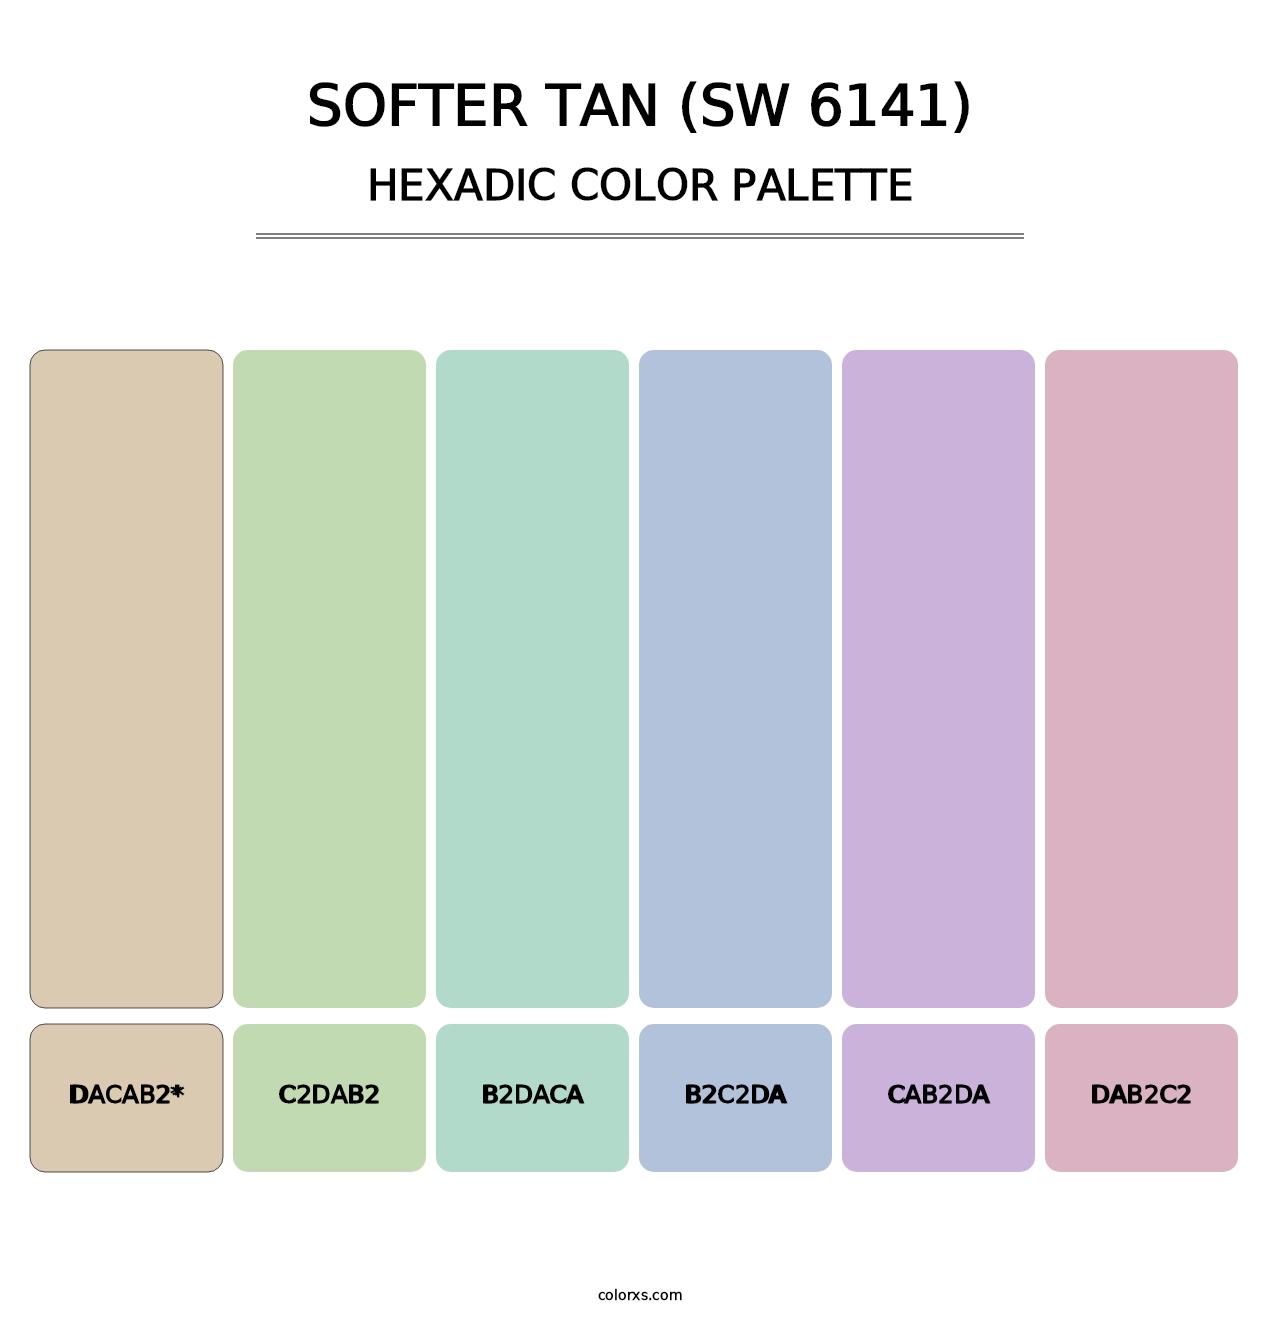 Softer Tan (SW 6141) - Hexadic Color Palette